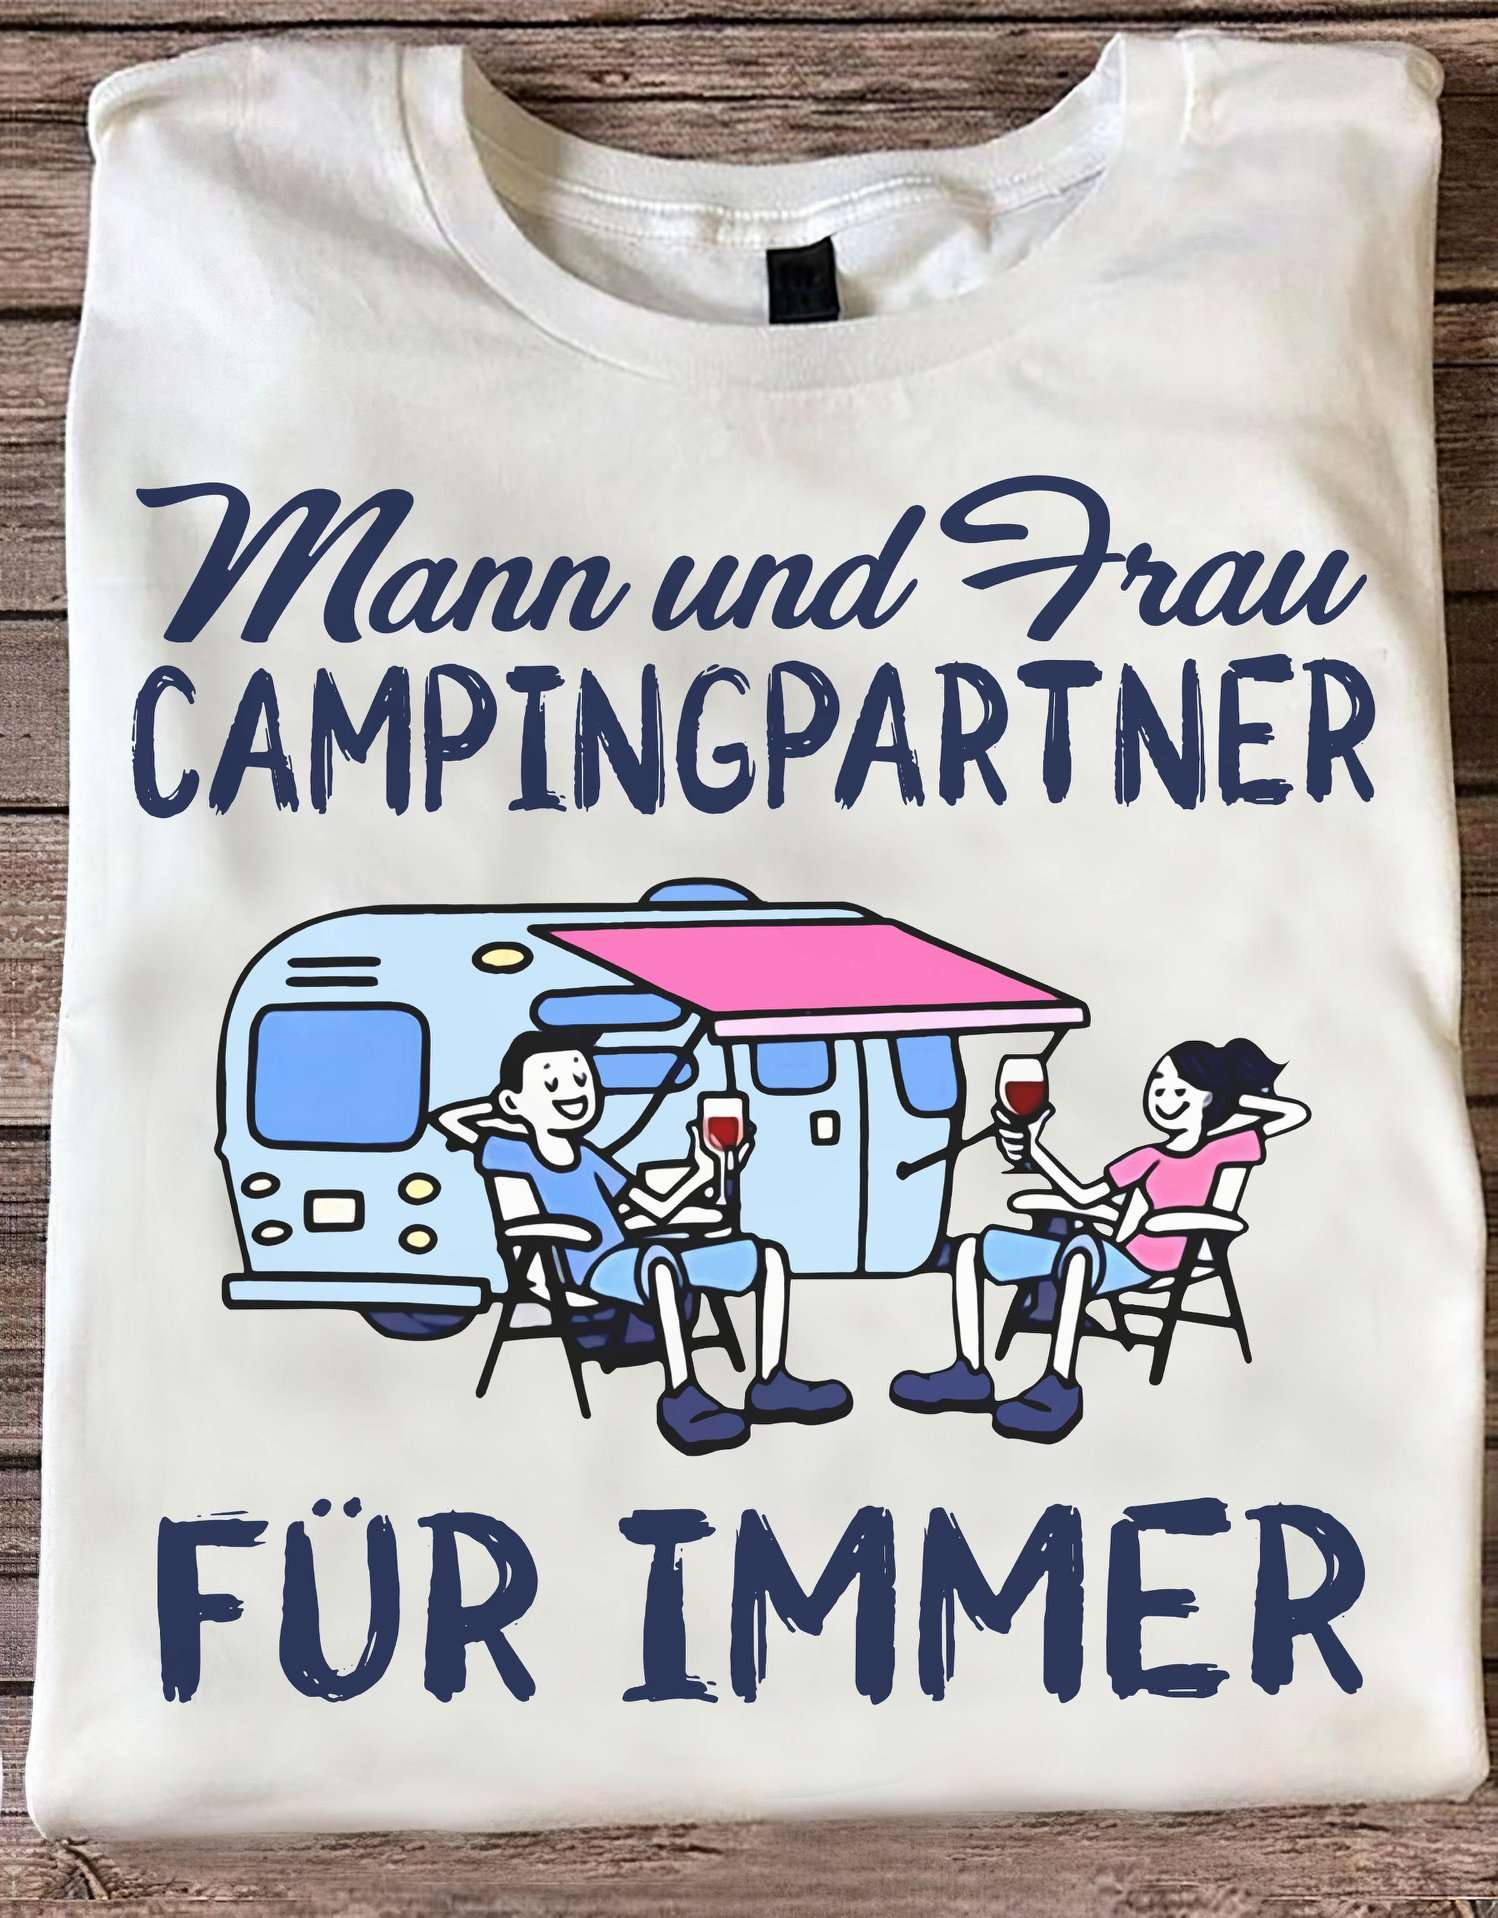 Mann und frau camping partner fur immer - Couple camping partner, gift for couple, camping car and wine